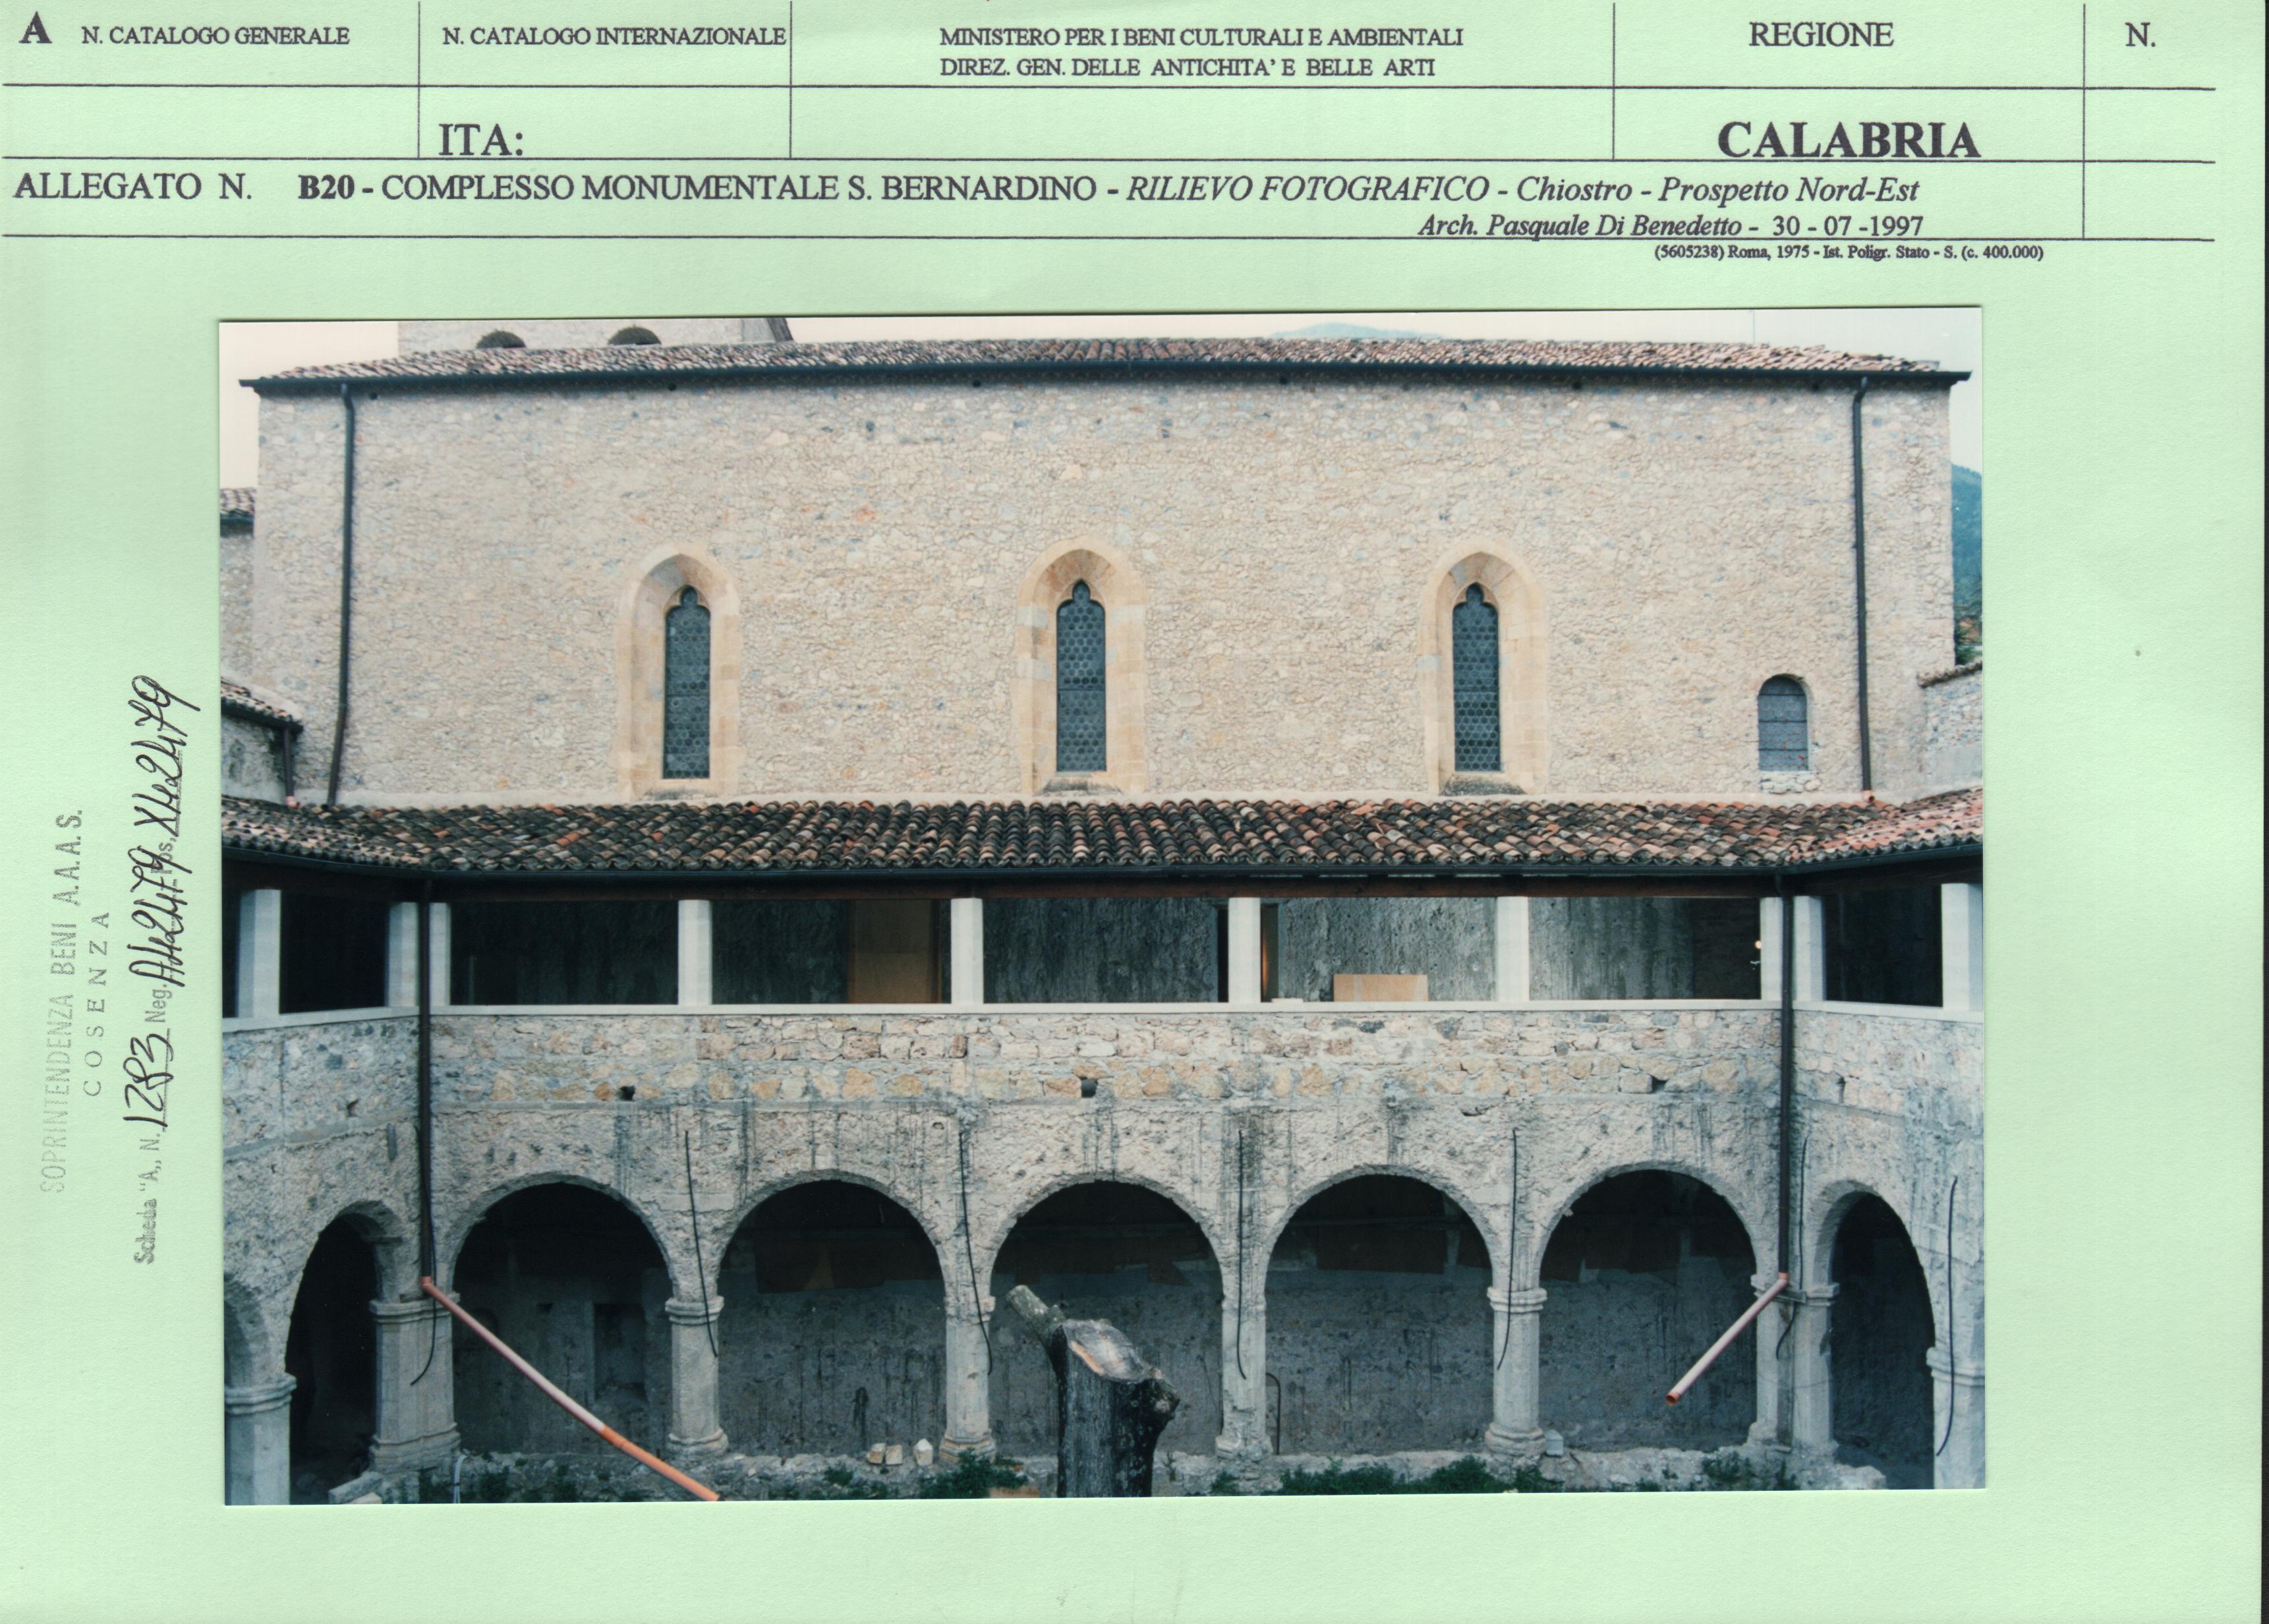 Complesso di San Bernardino (monastero) - Morano Calabro (CS) 